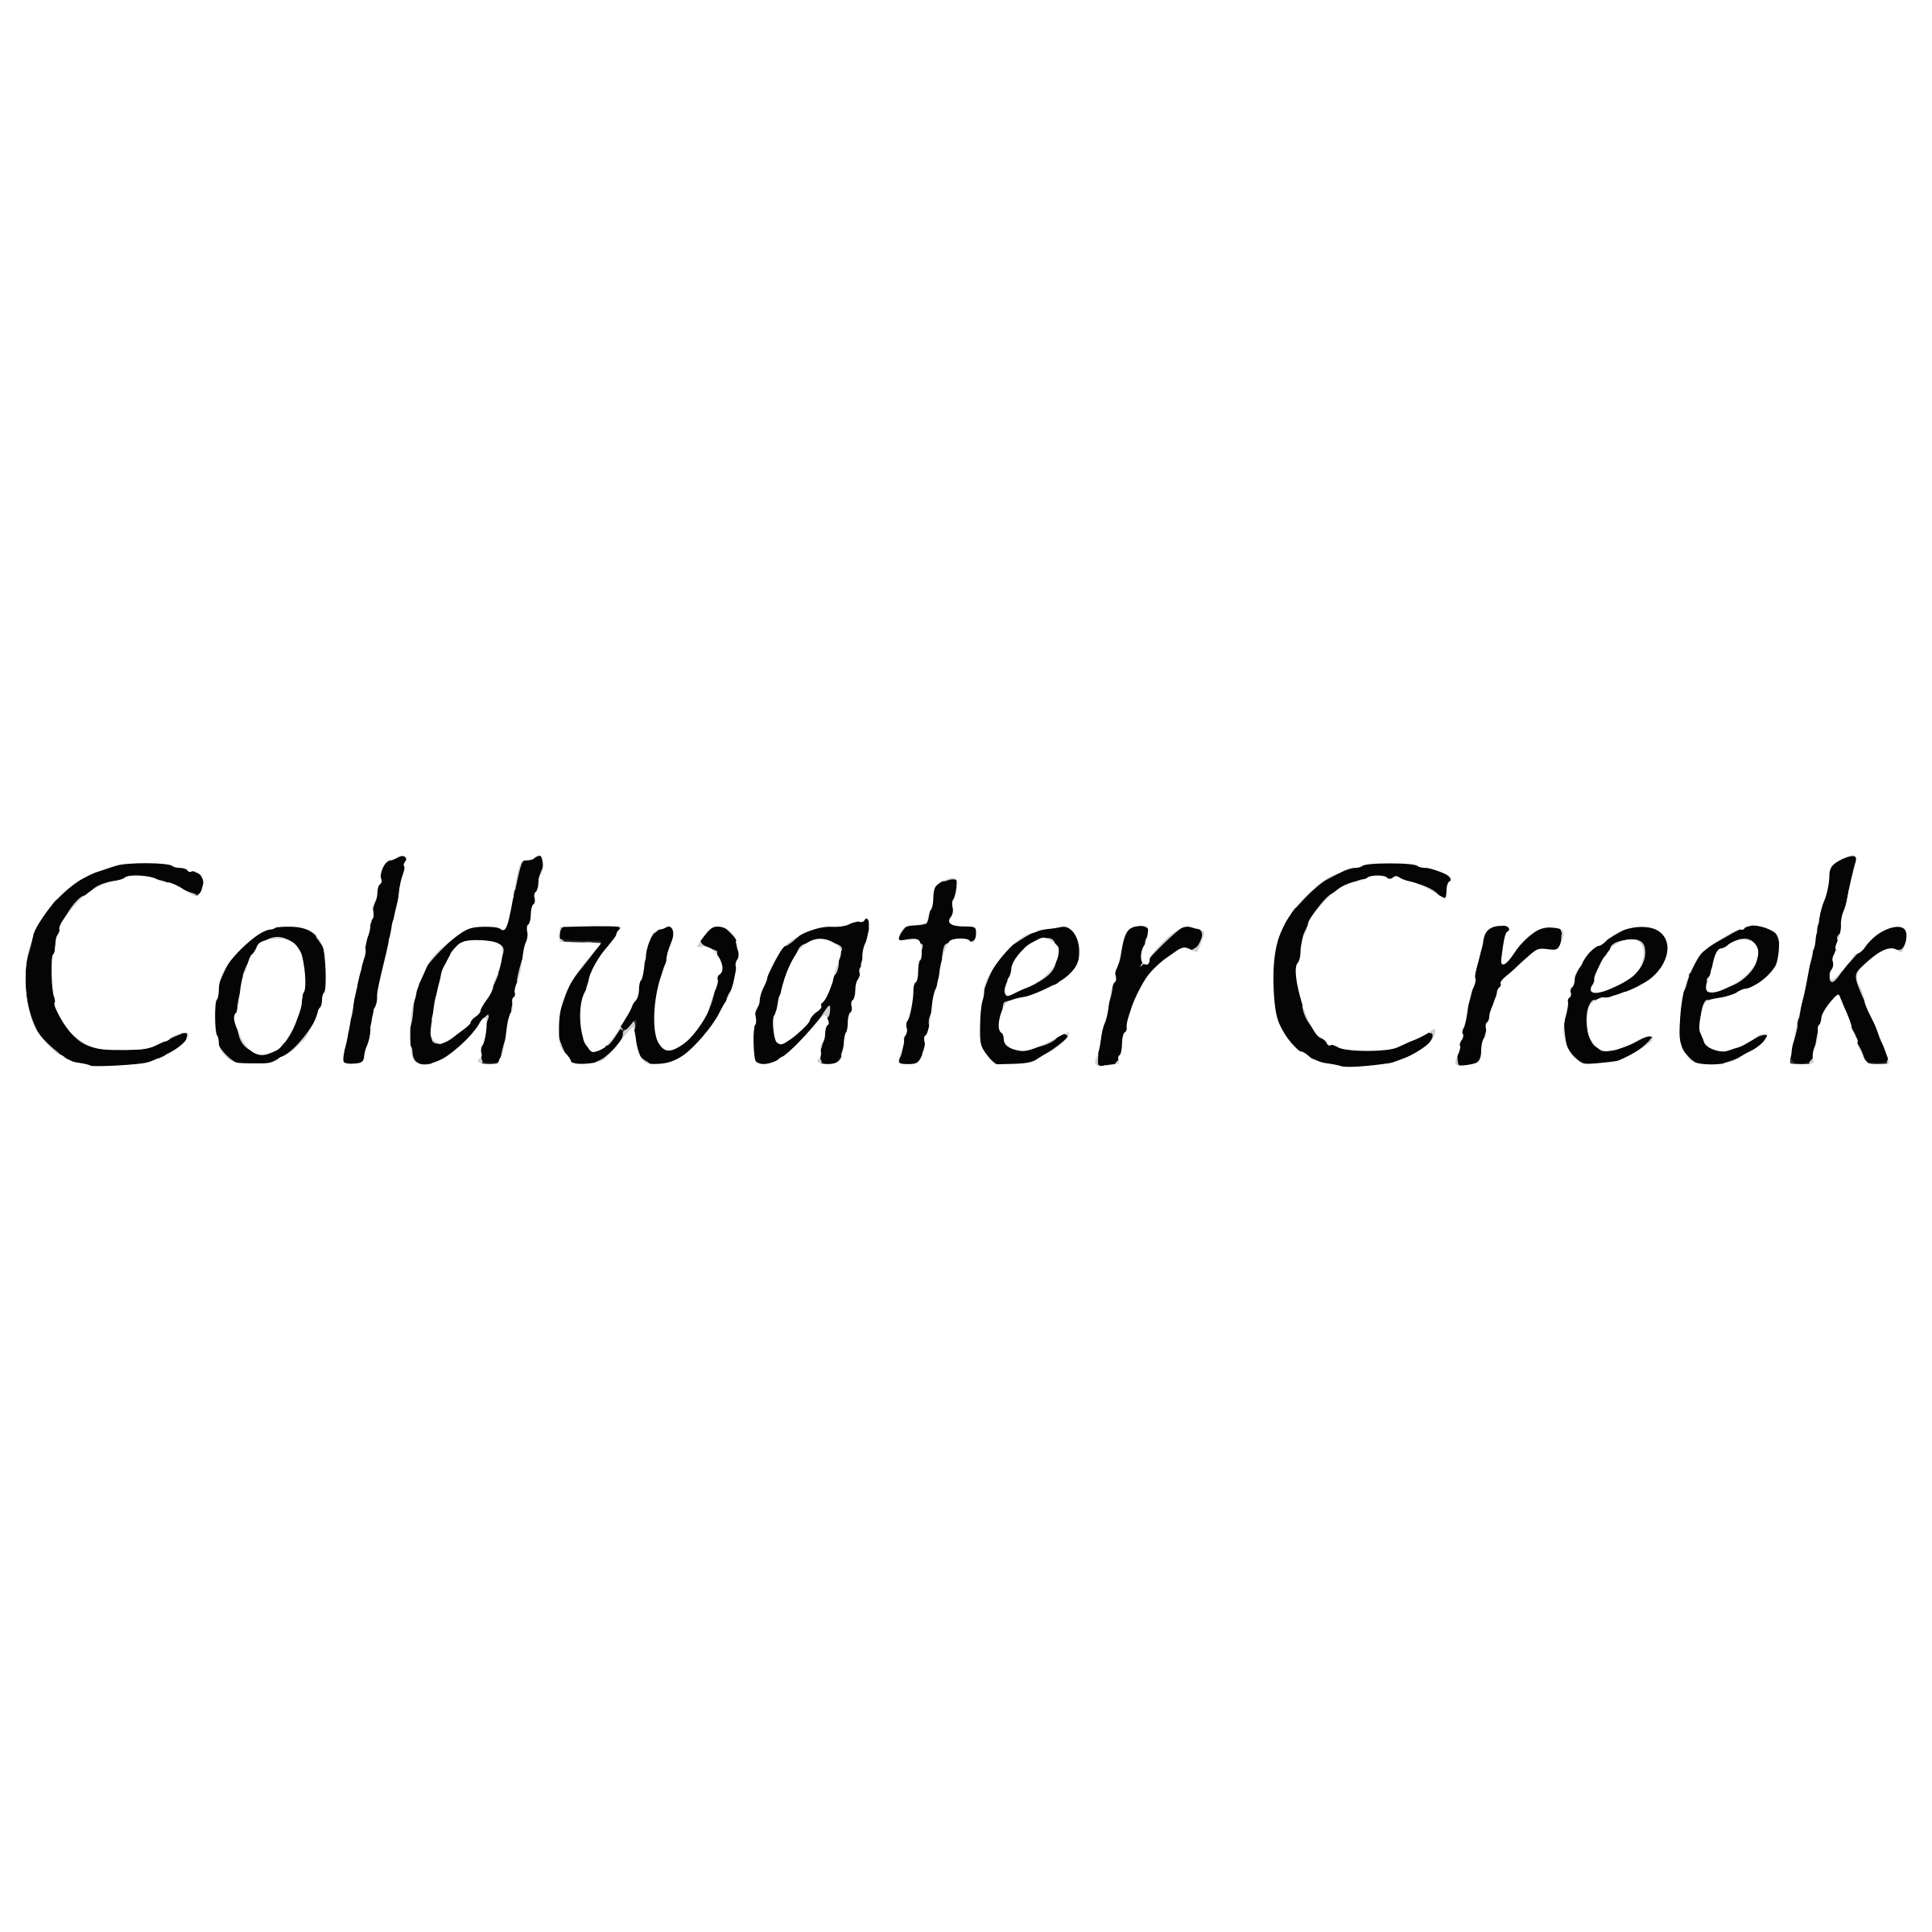 Creek Logo - Coldwater Creek Logo PNG Transparent & SVG Vector - Freebie Supply